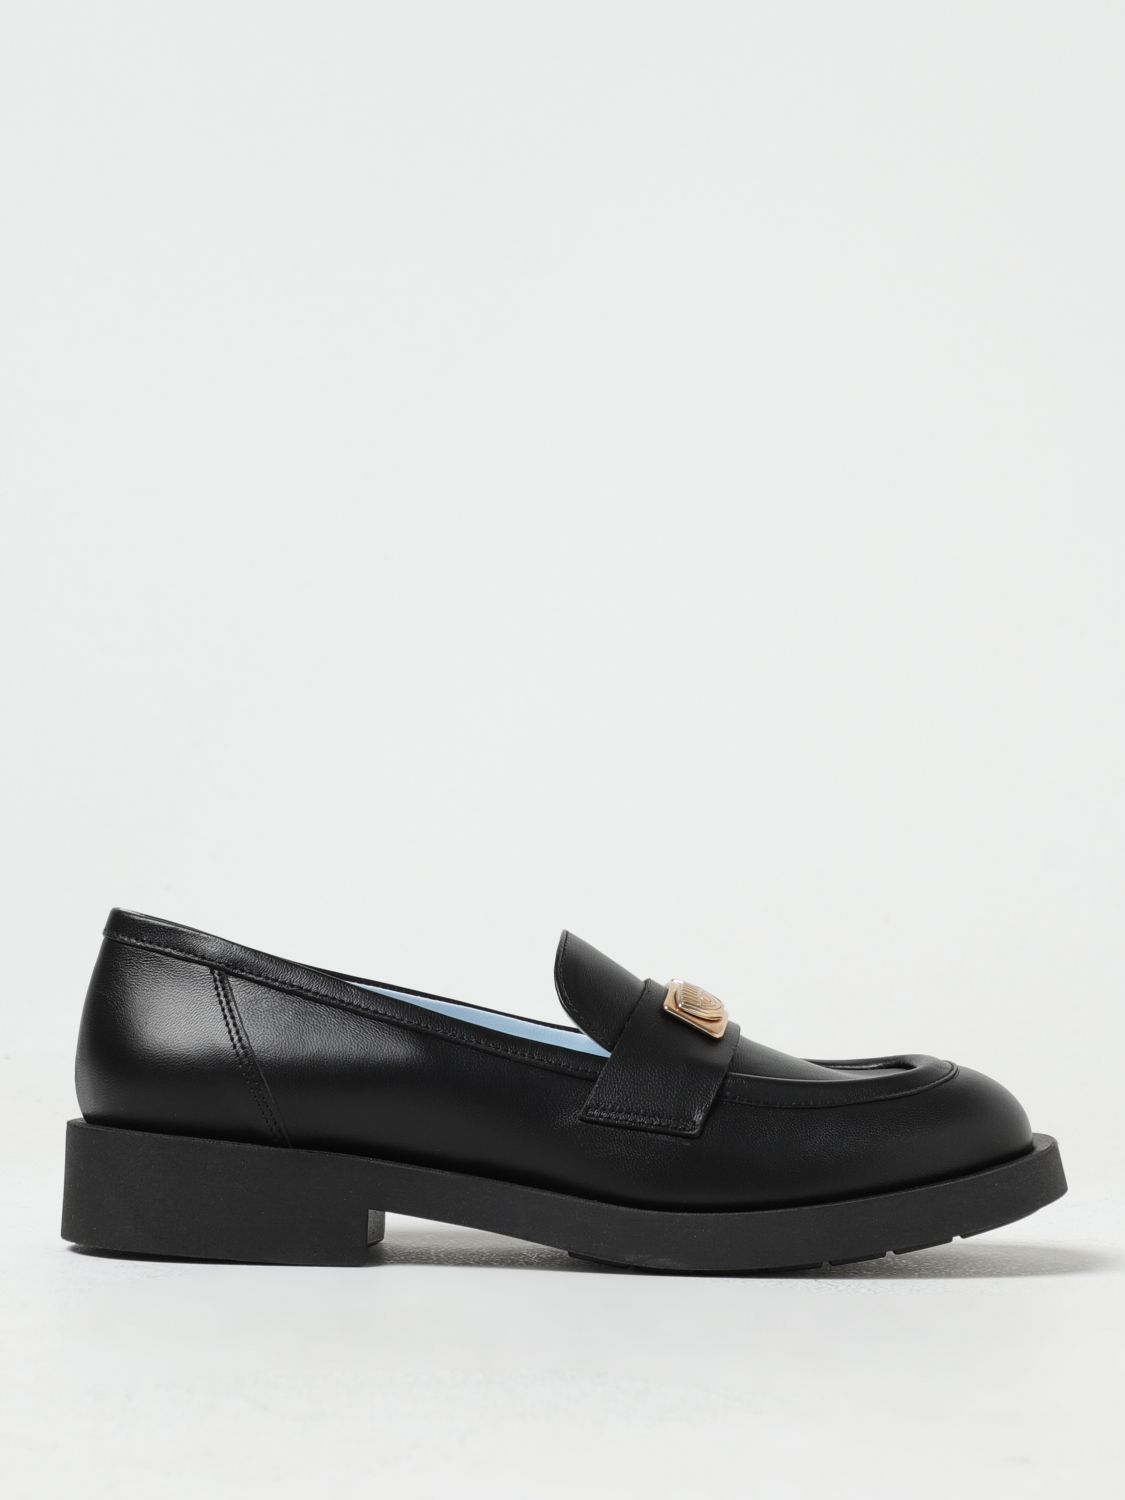 Chiara Ferragni Shoes in Black